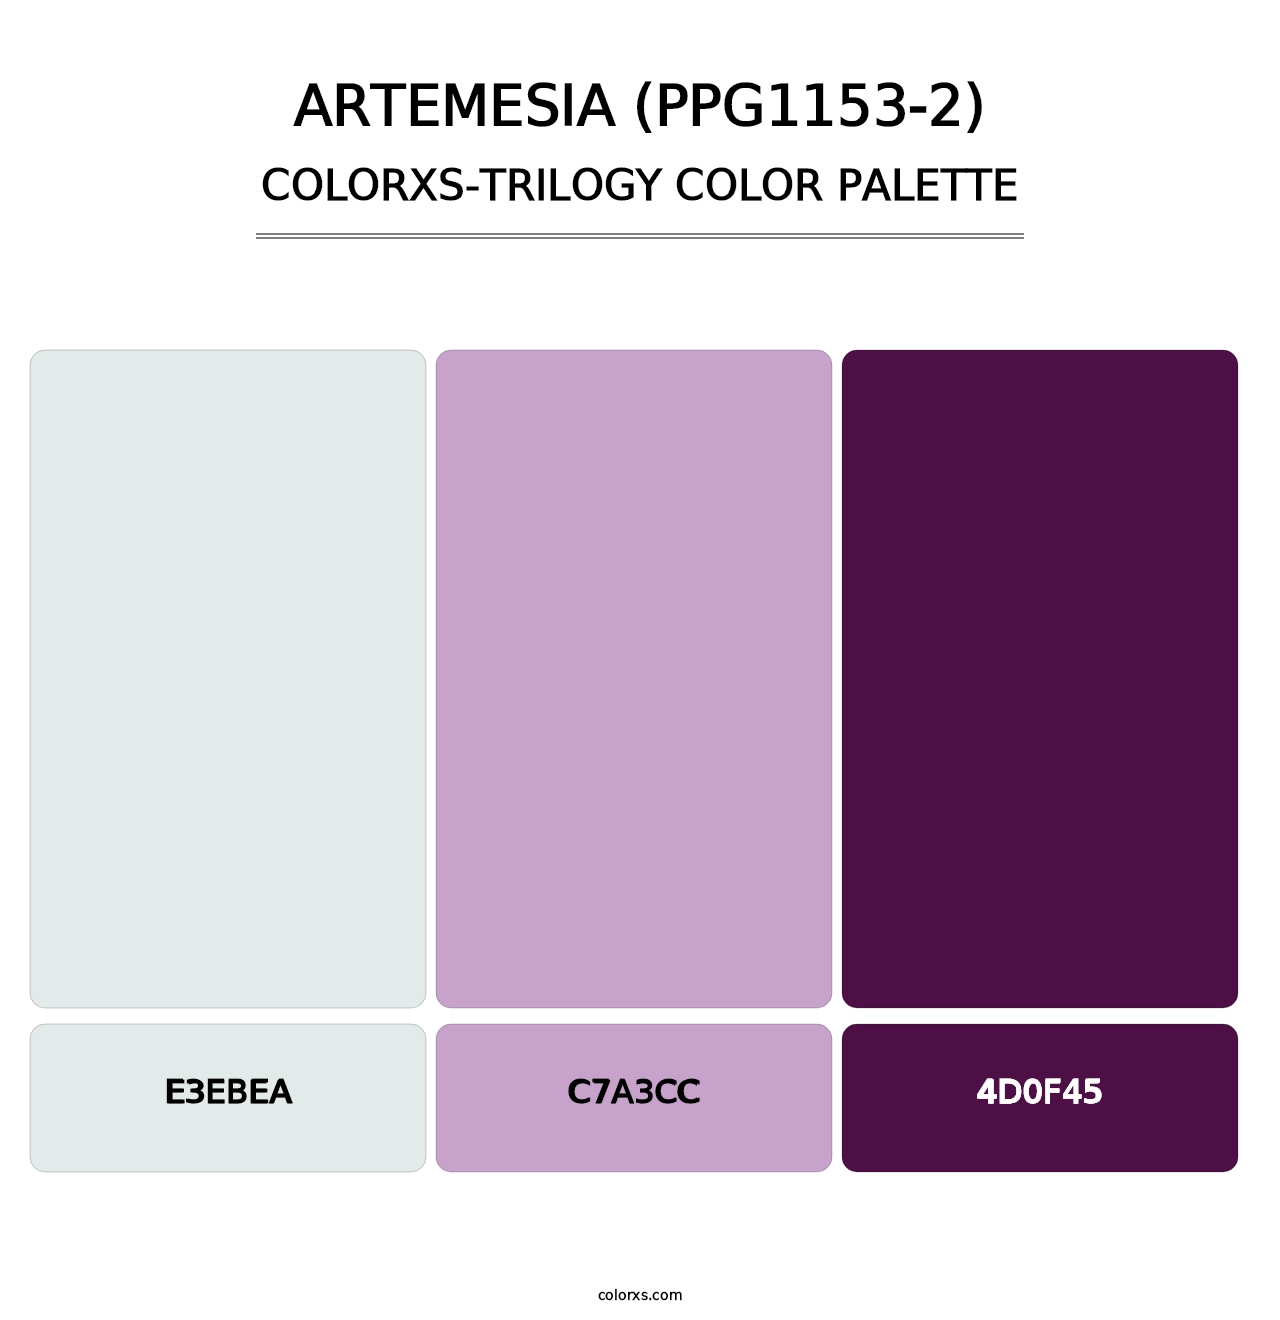 Artemesia (PPG1153-2) - Colorxs Trilogy Palette